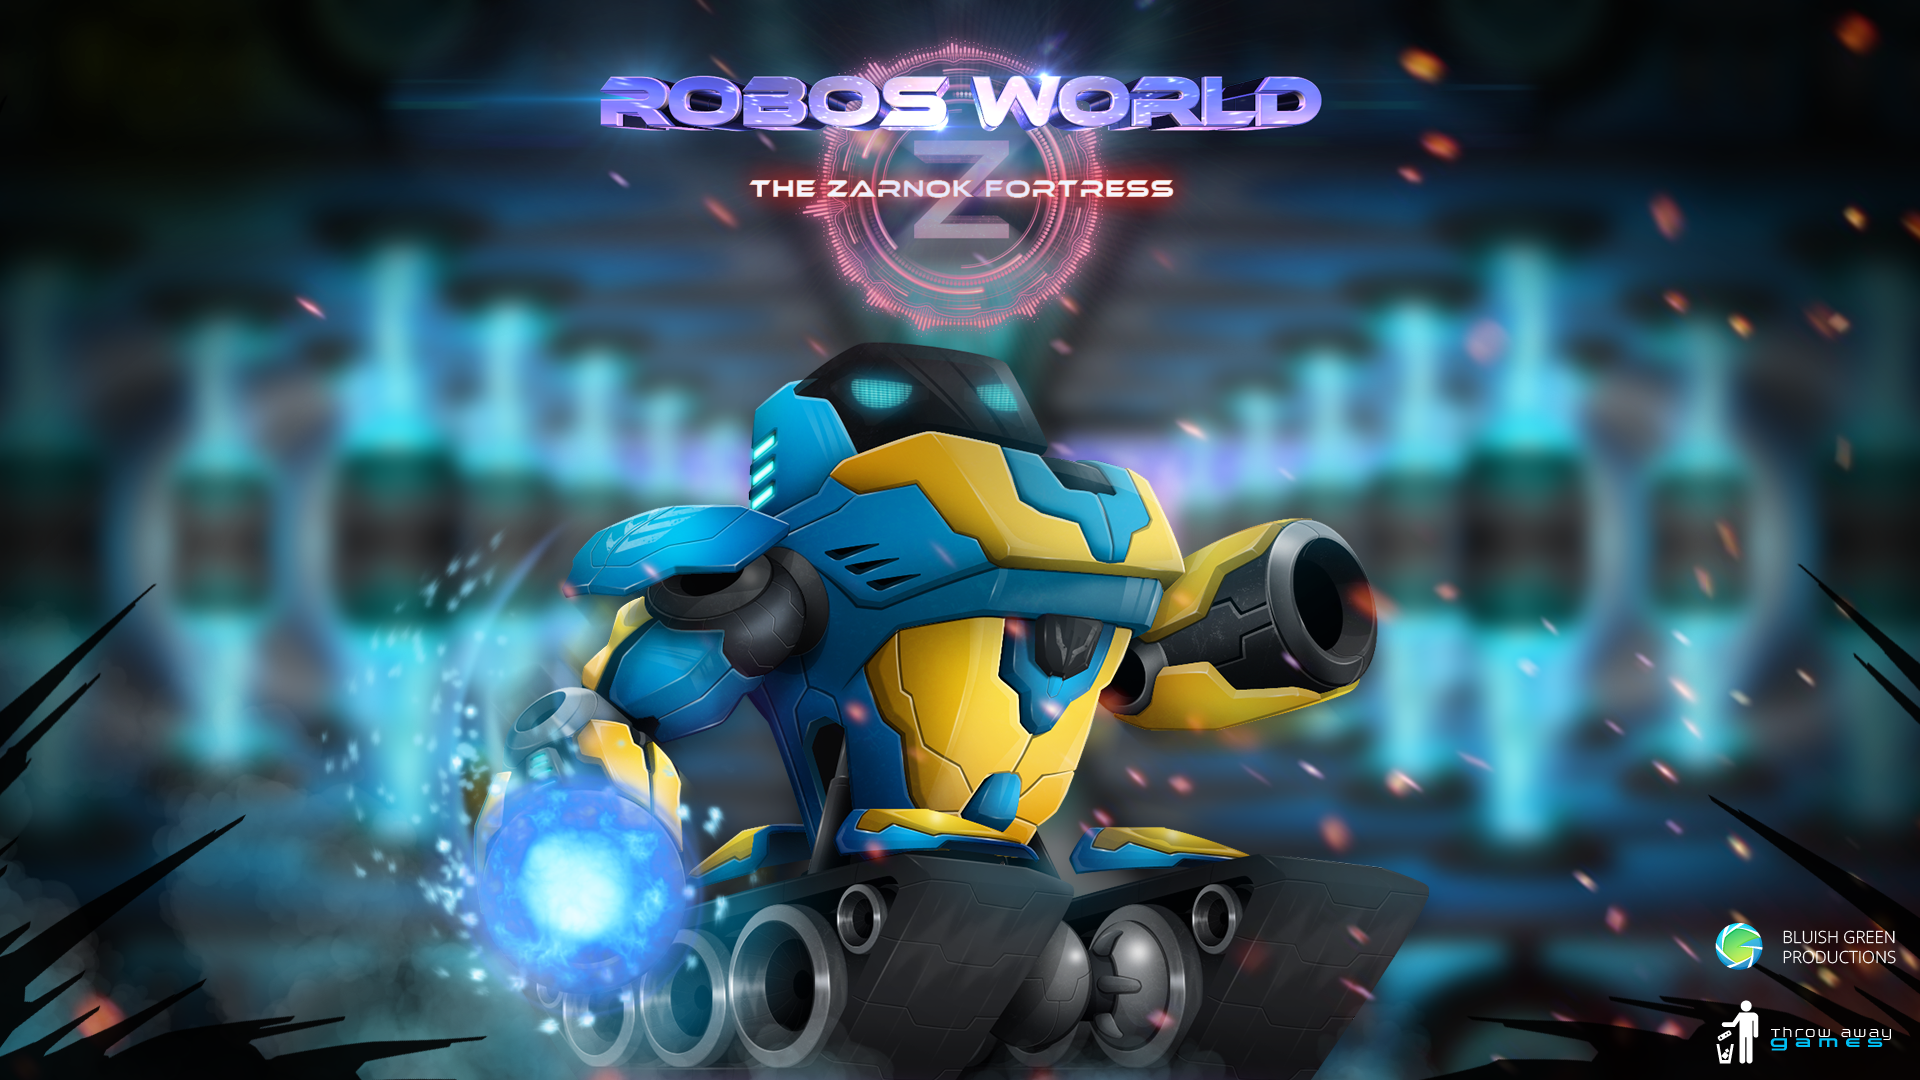 Robo's World: The Zarnok Fortress